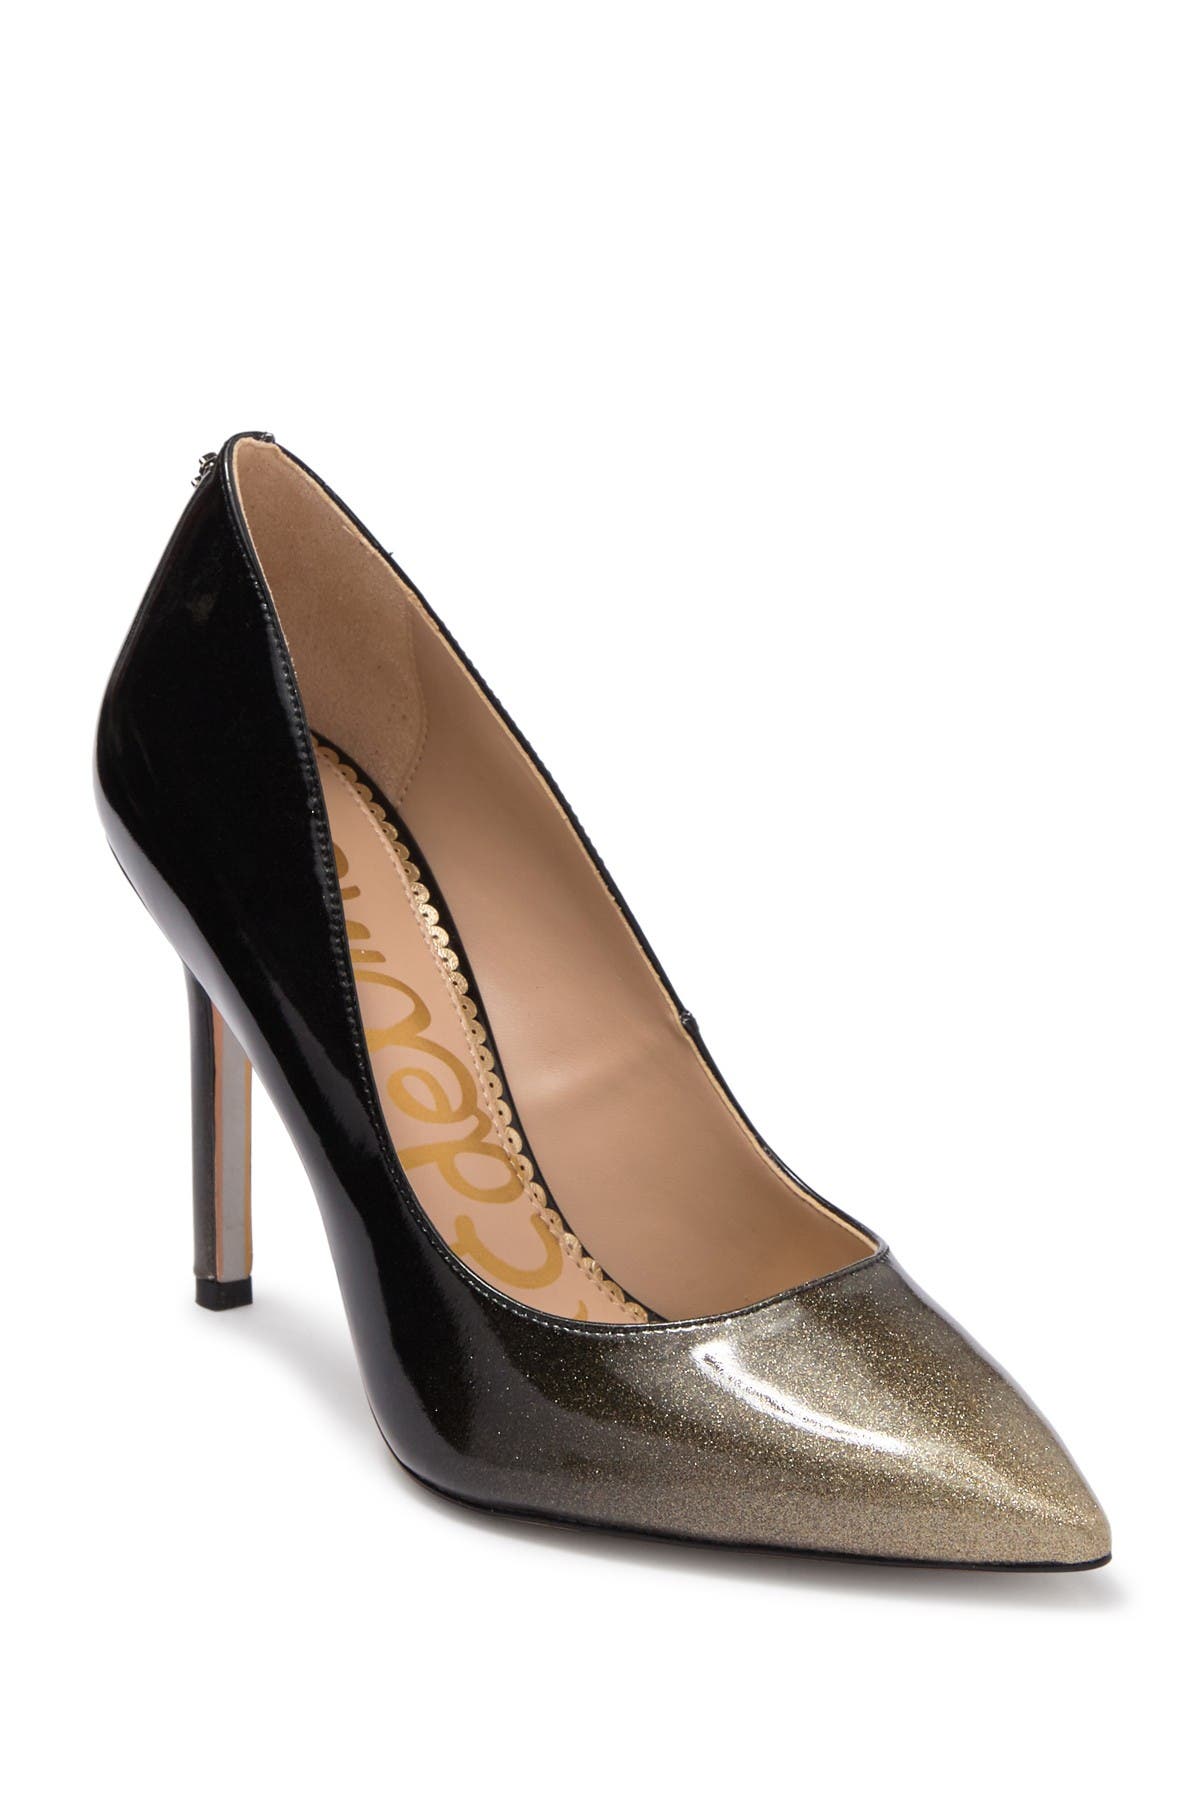 sam edelman 2 inch heels